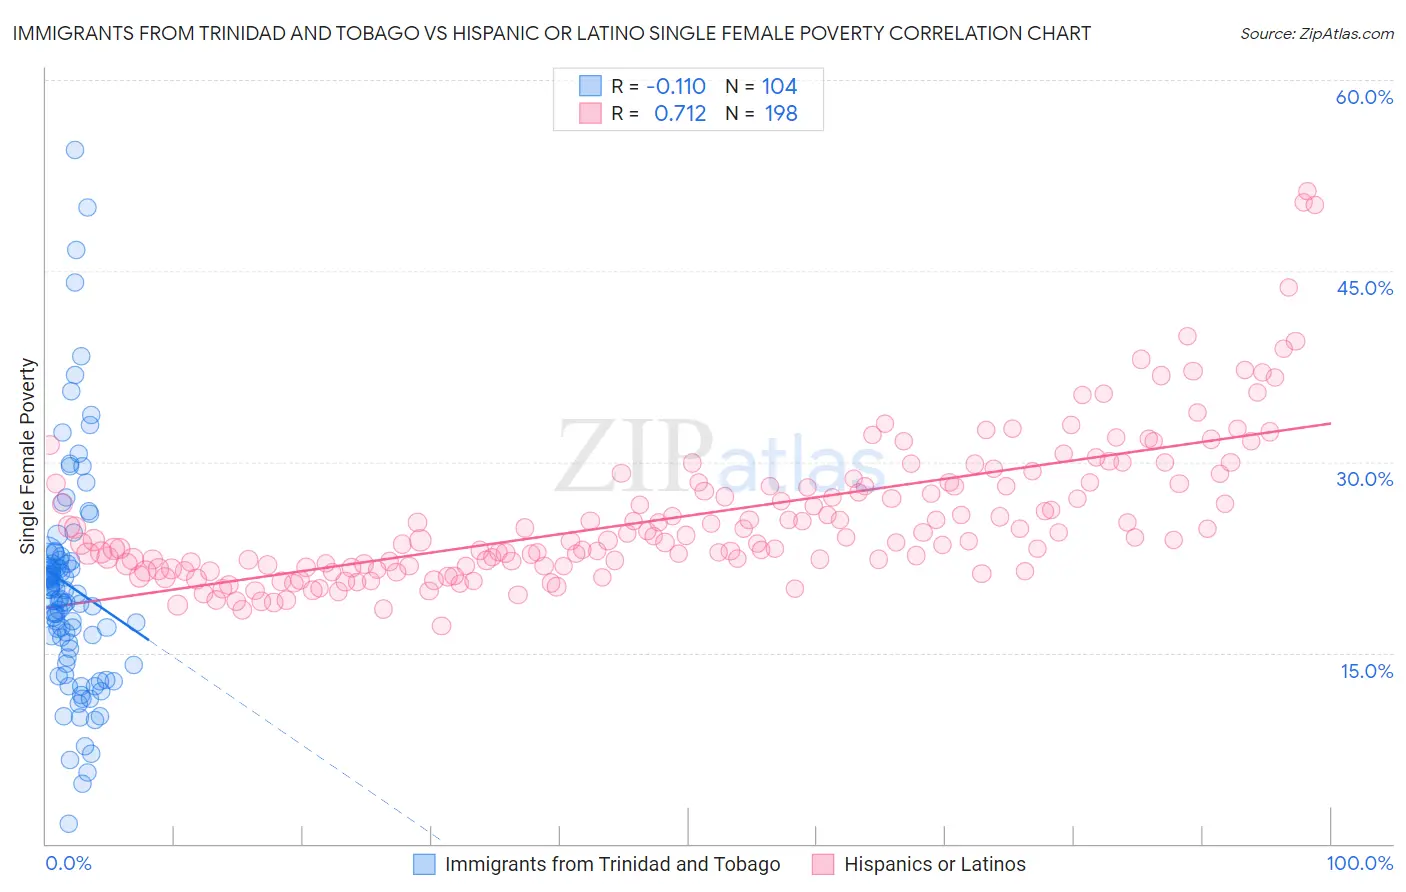 Immigrants from Trinidad and Tobago vs Hispanic or Latino Single Female Poverty